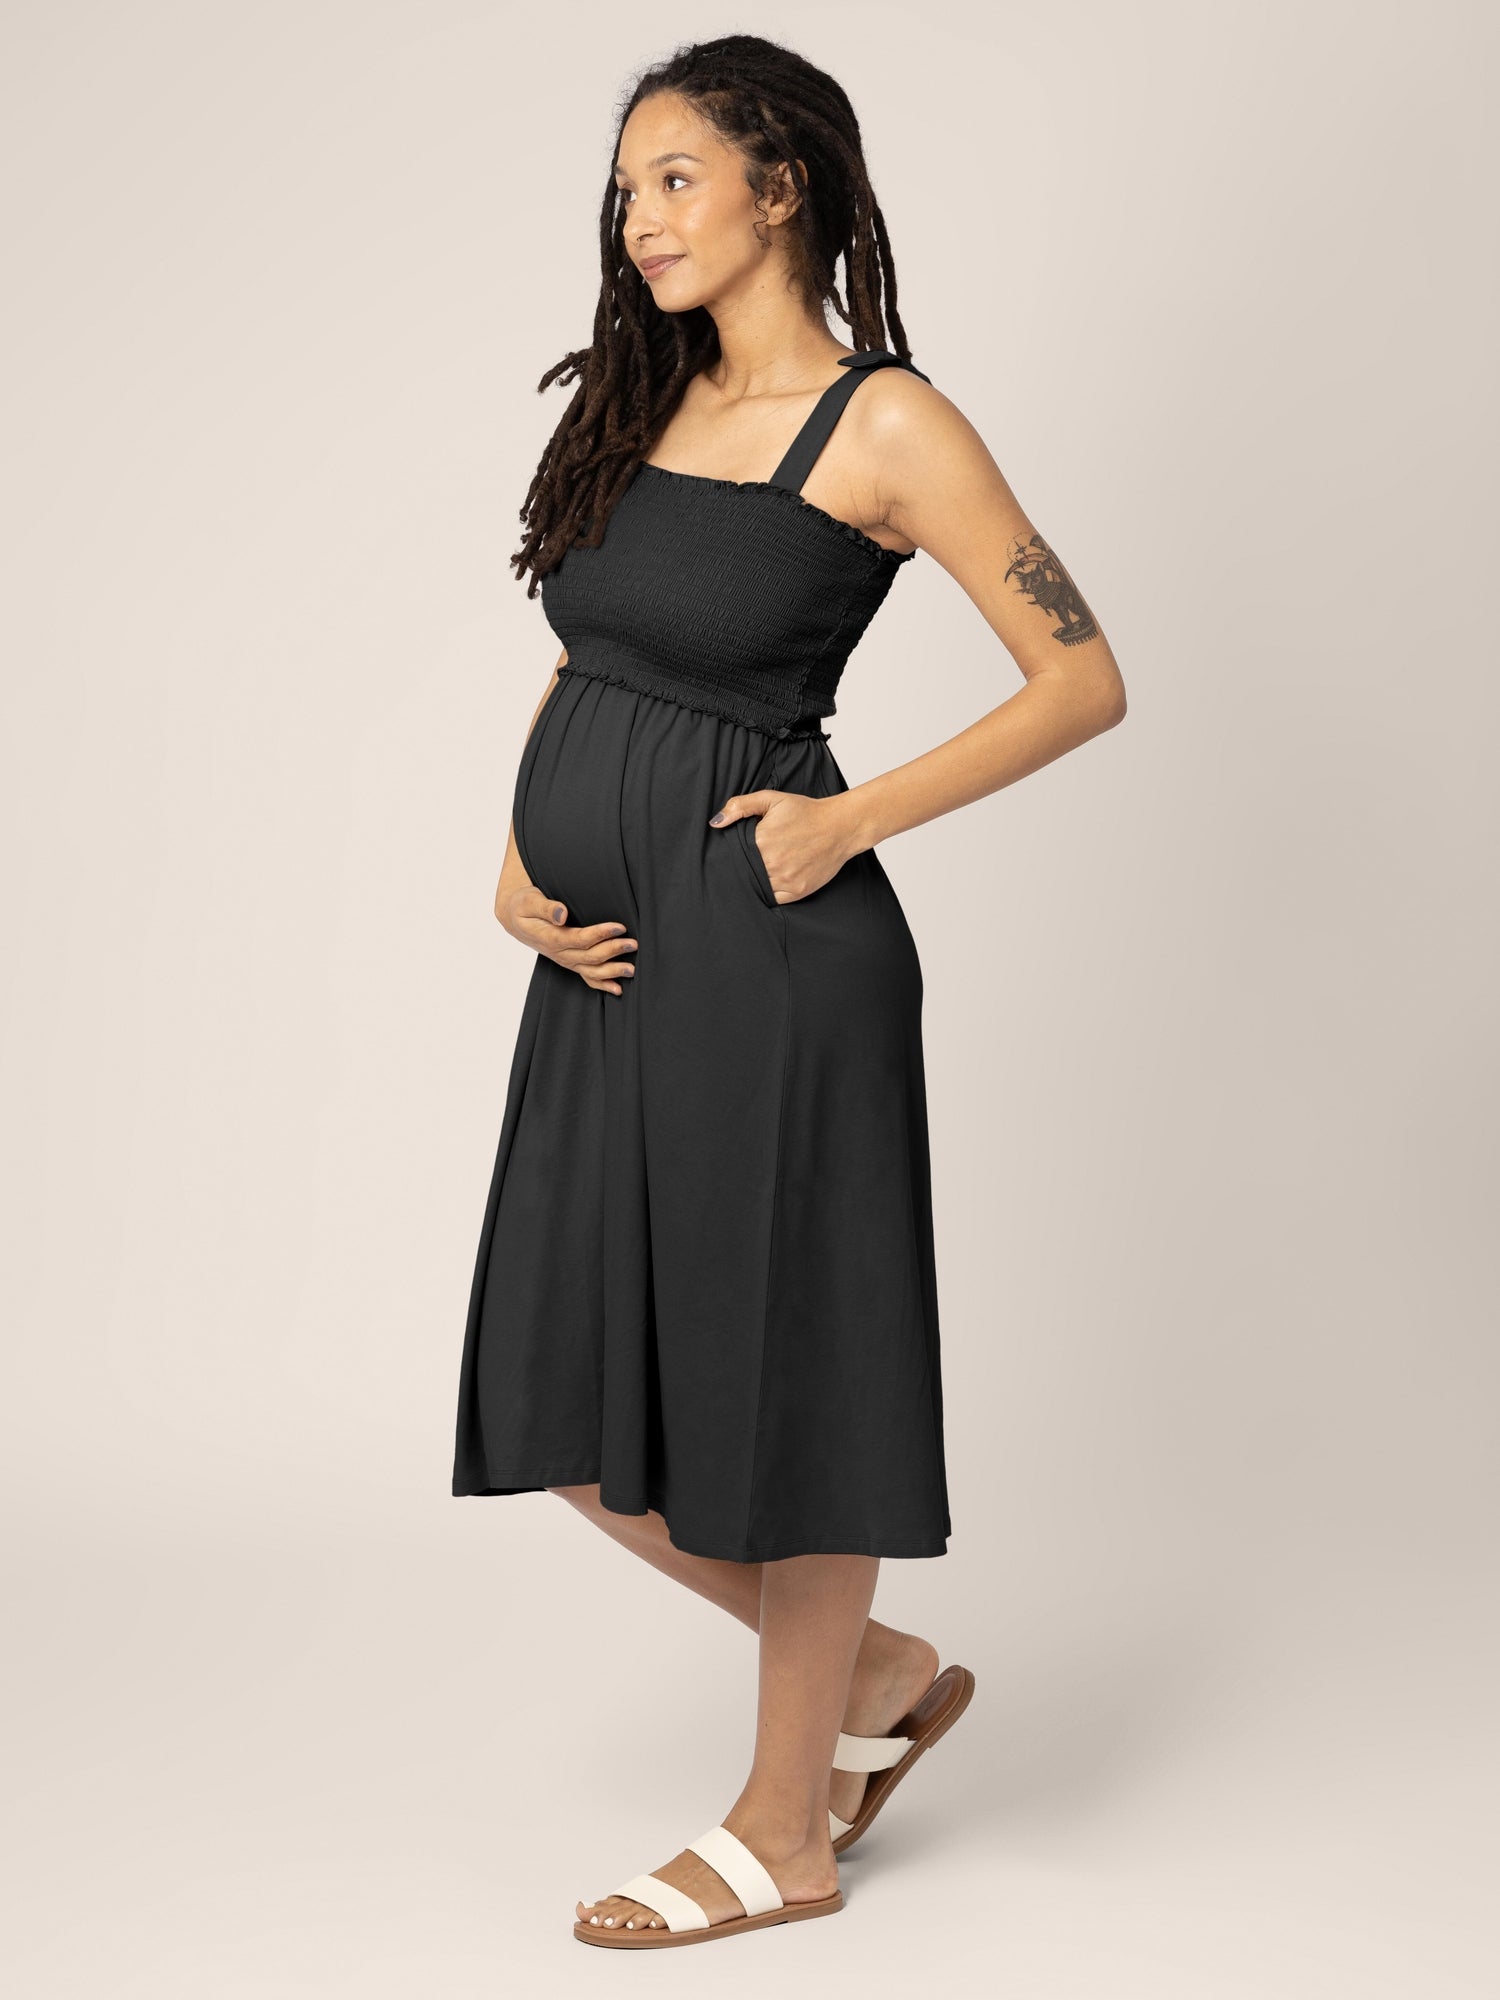 Pregnant model wearing the Sienna Smocked Maternity & Nursing Dress in black 